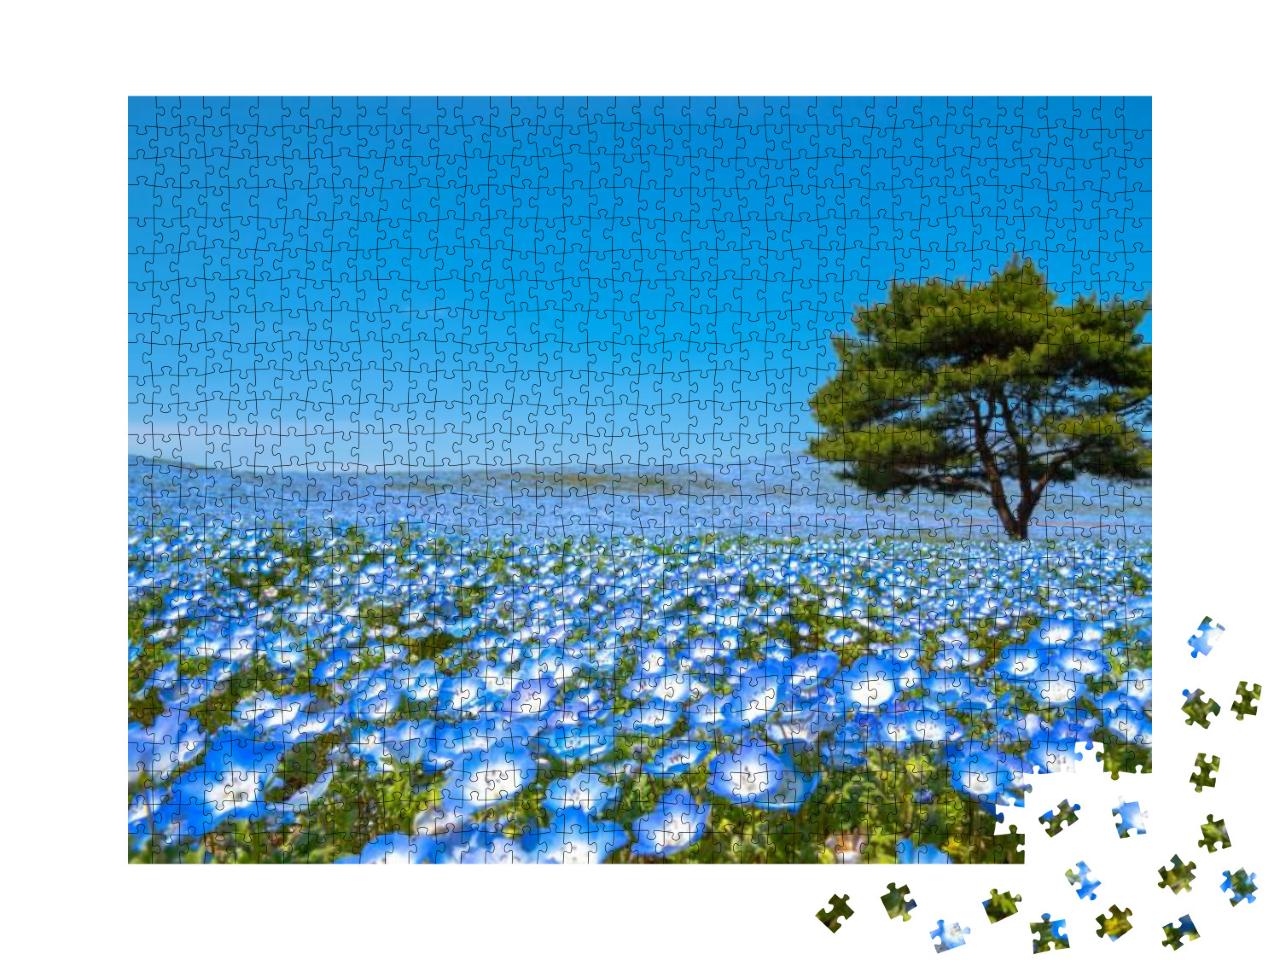 Mountain, Tree & Nemophila Baby Blue Eyes Flowers Field... Jigsaw Puzzle with 1000 pieces